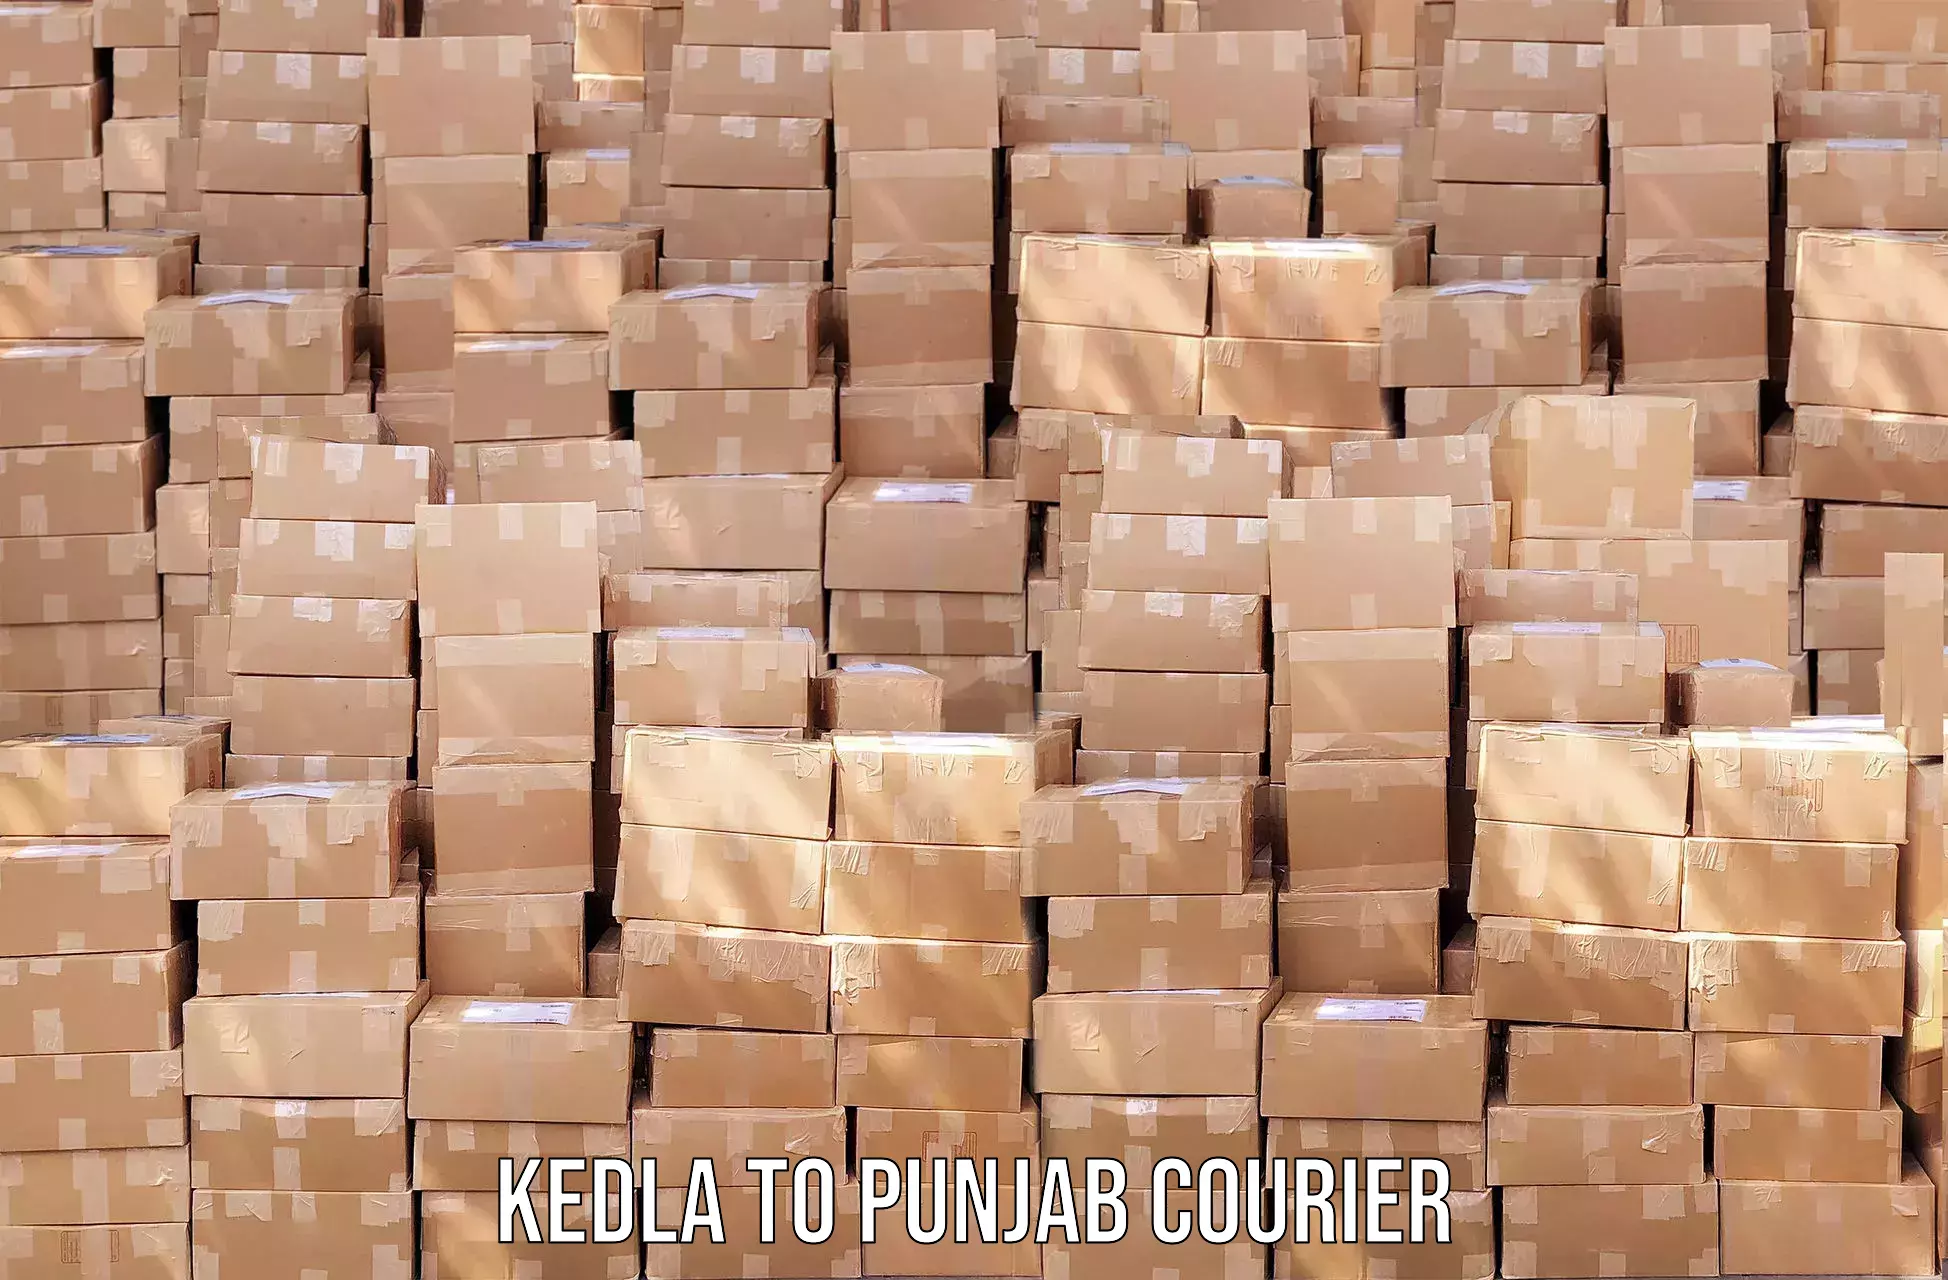 Pharmaceutical courier Kedla to Fatehgarh Sahib